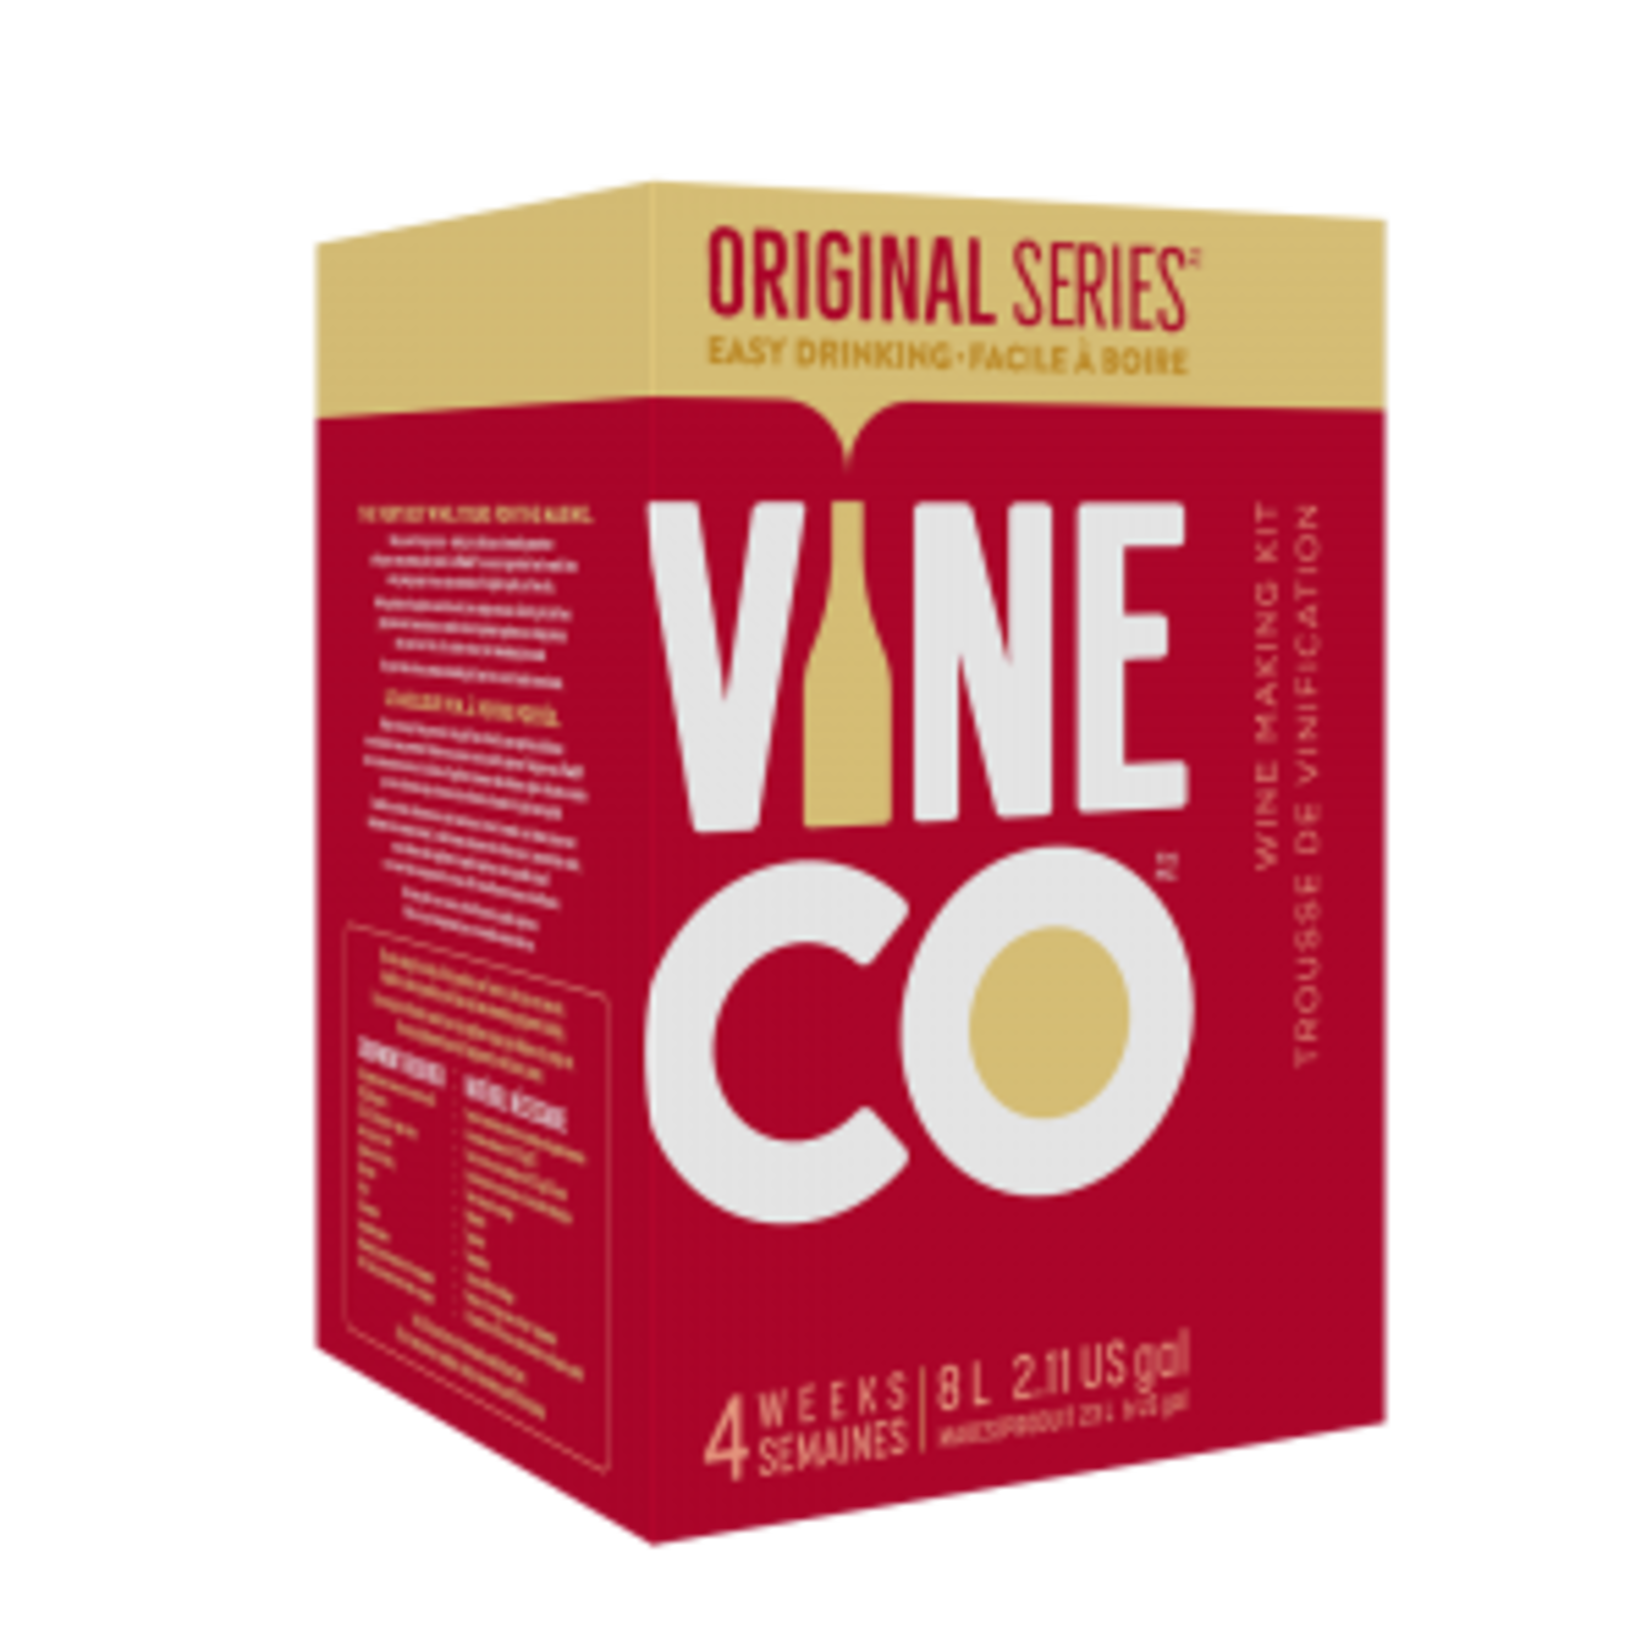 Vine Co. Original Series Sangiovese, Italy